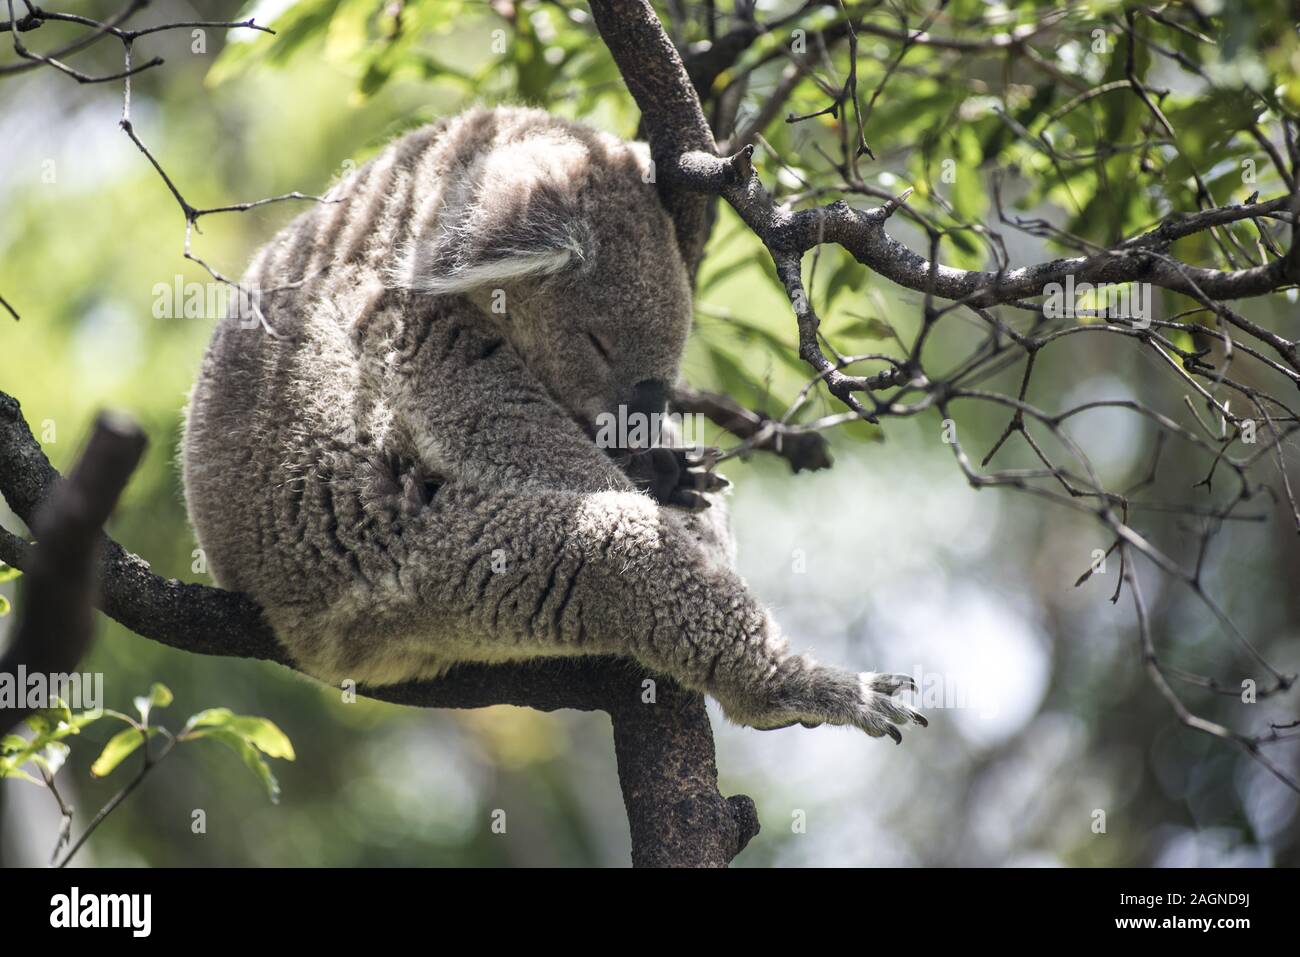 Cute sleeping koala on a branch of a tree Stock Photo